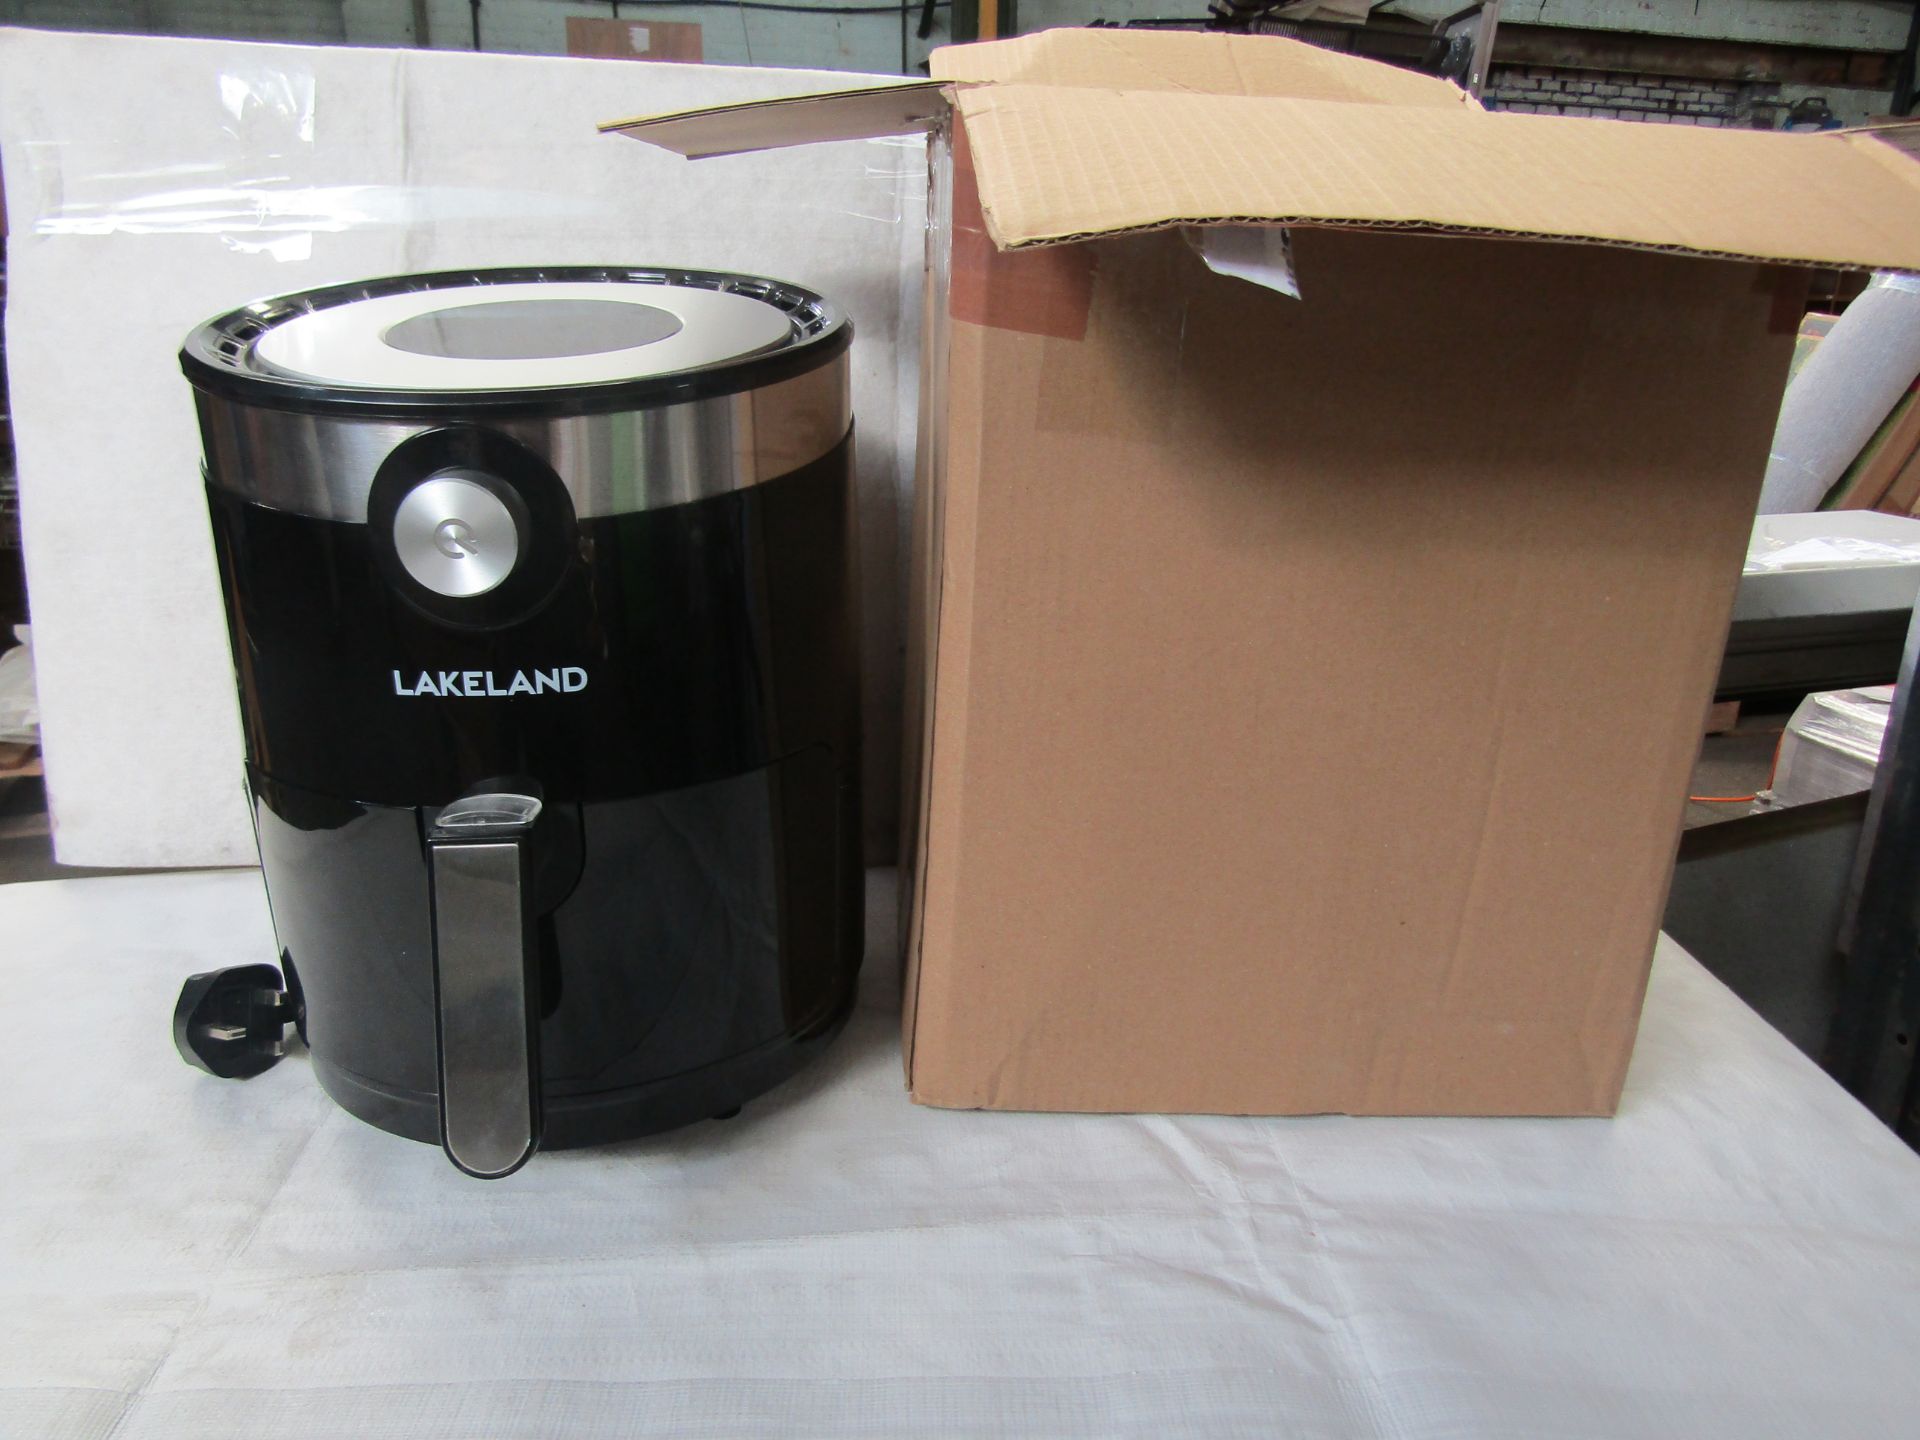 Lakeland Mini Food Processor RRP 37